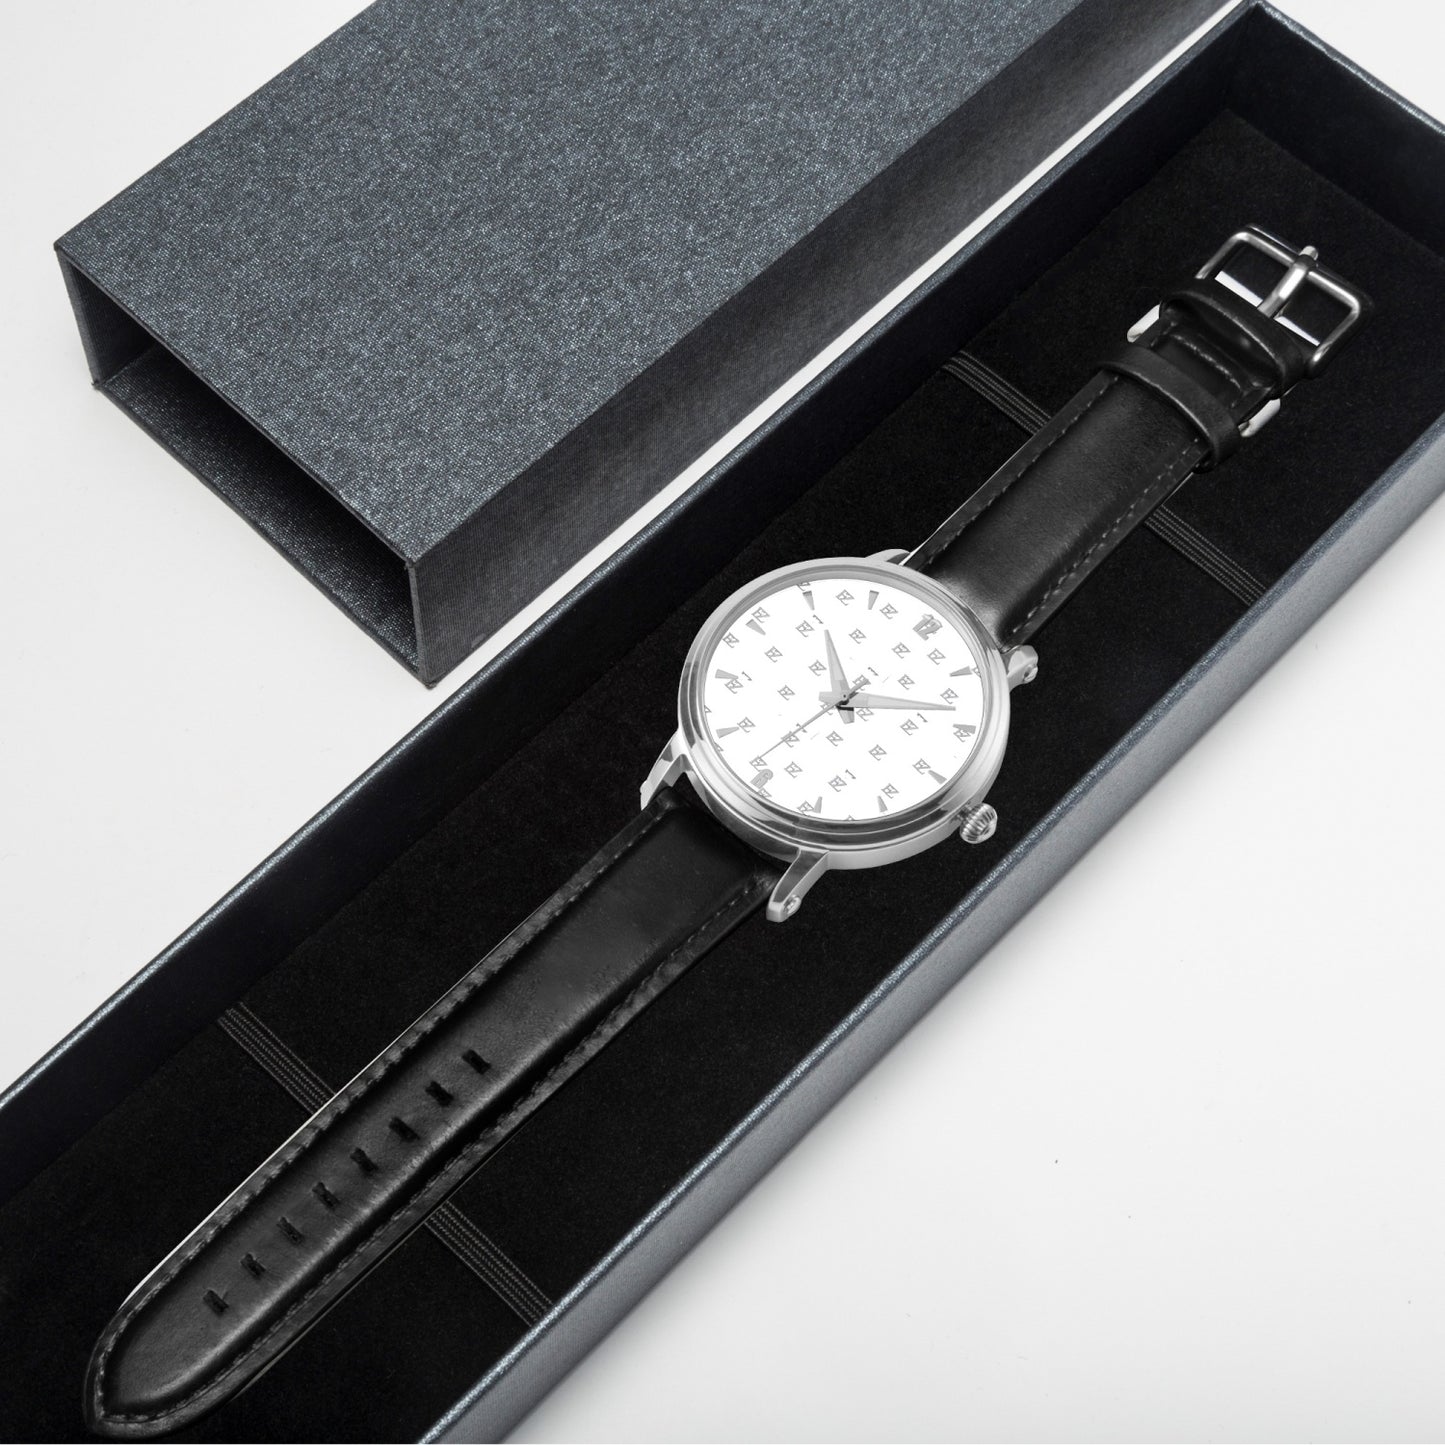 FZ Unisex Automatic Watch (Silver)